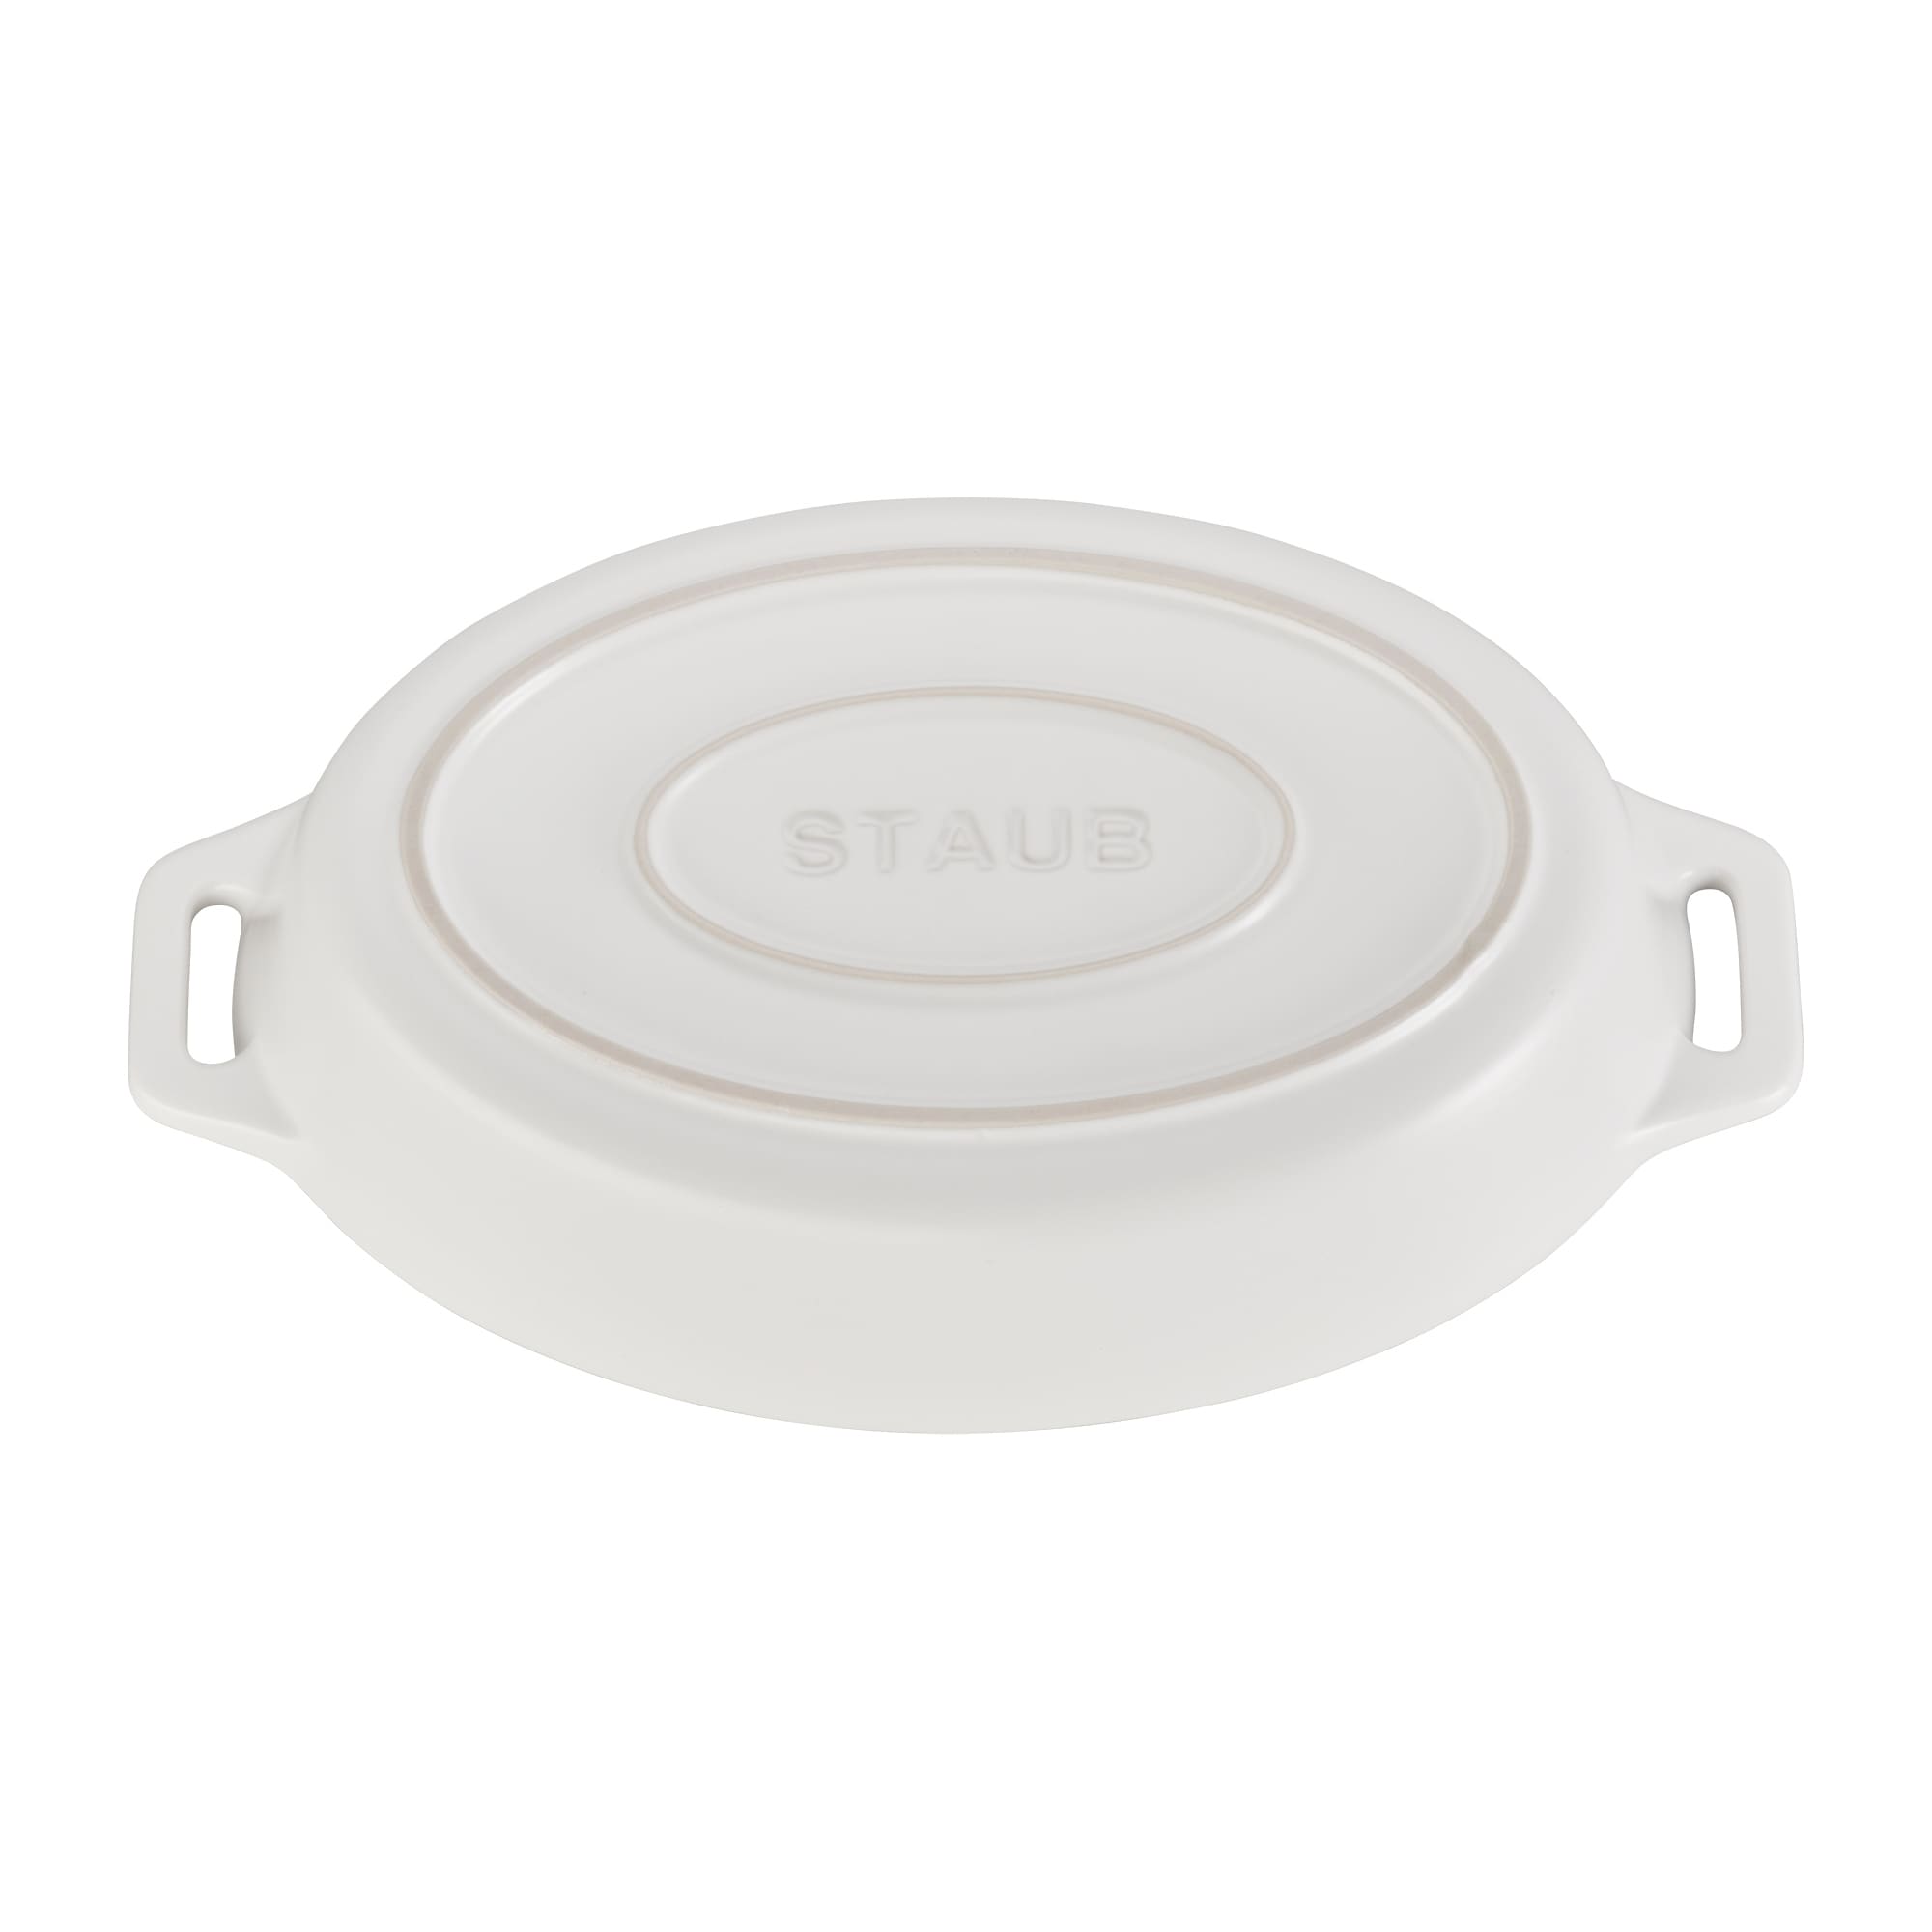 Staub Ceramic - Oval Baking Dishes/ Gratins 2-pc, oval, Baking Dish Set,  black matte